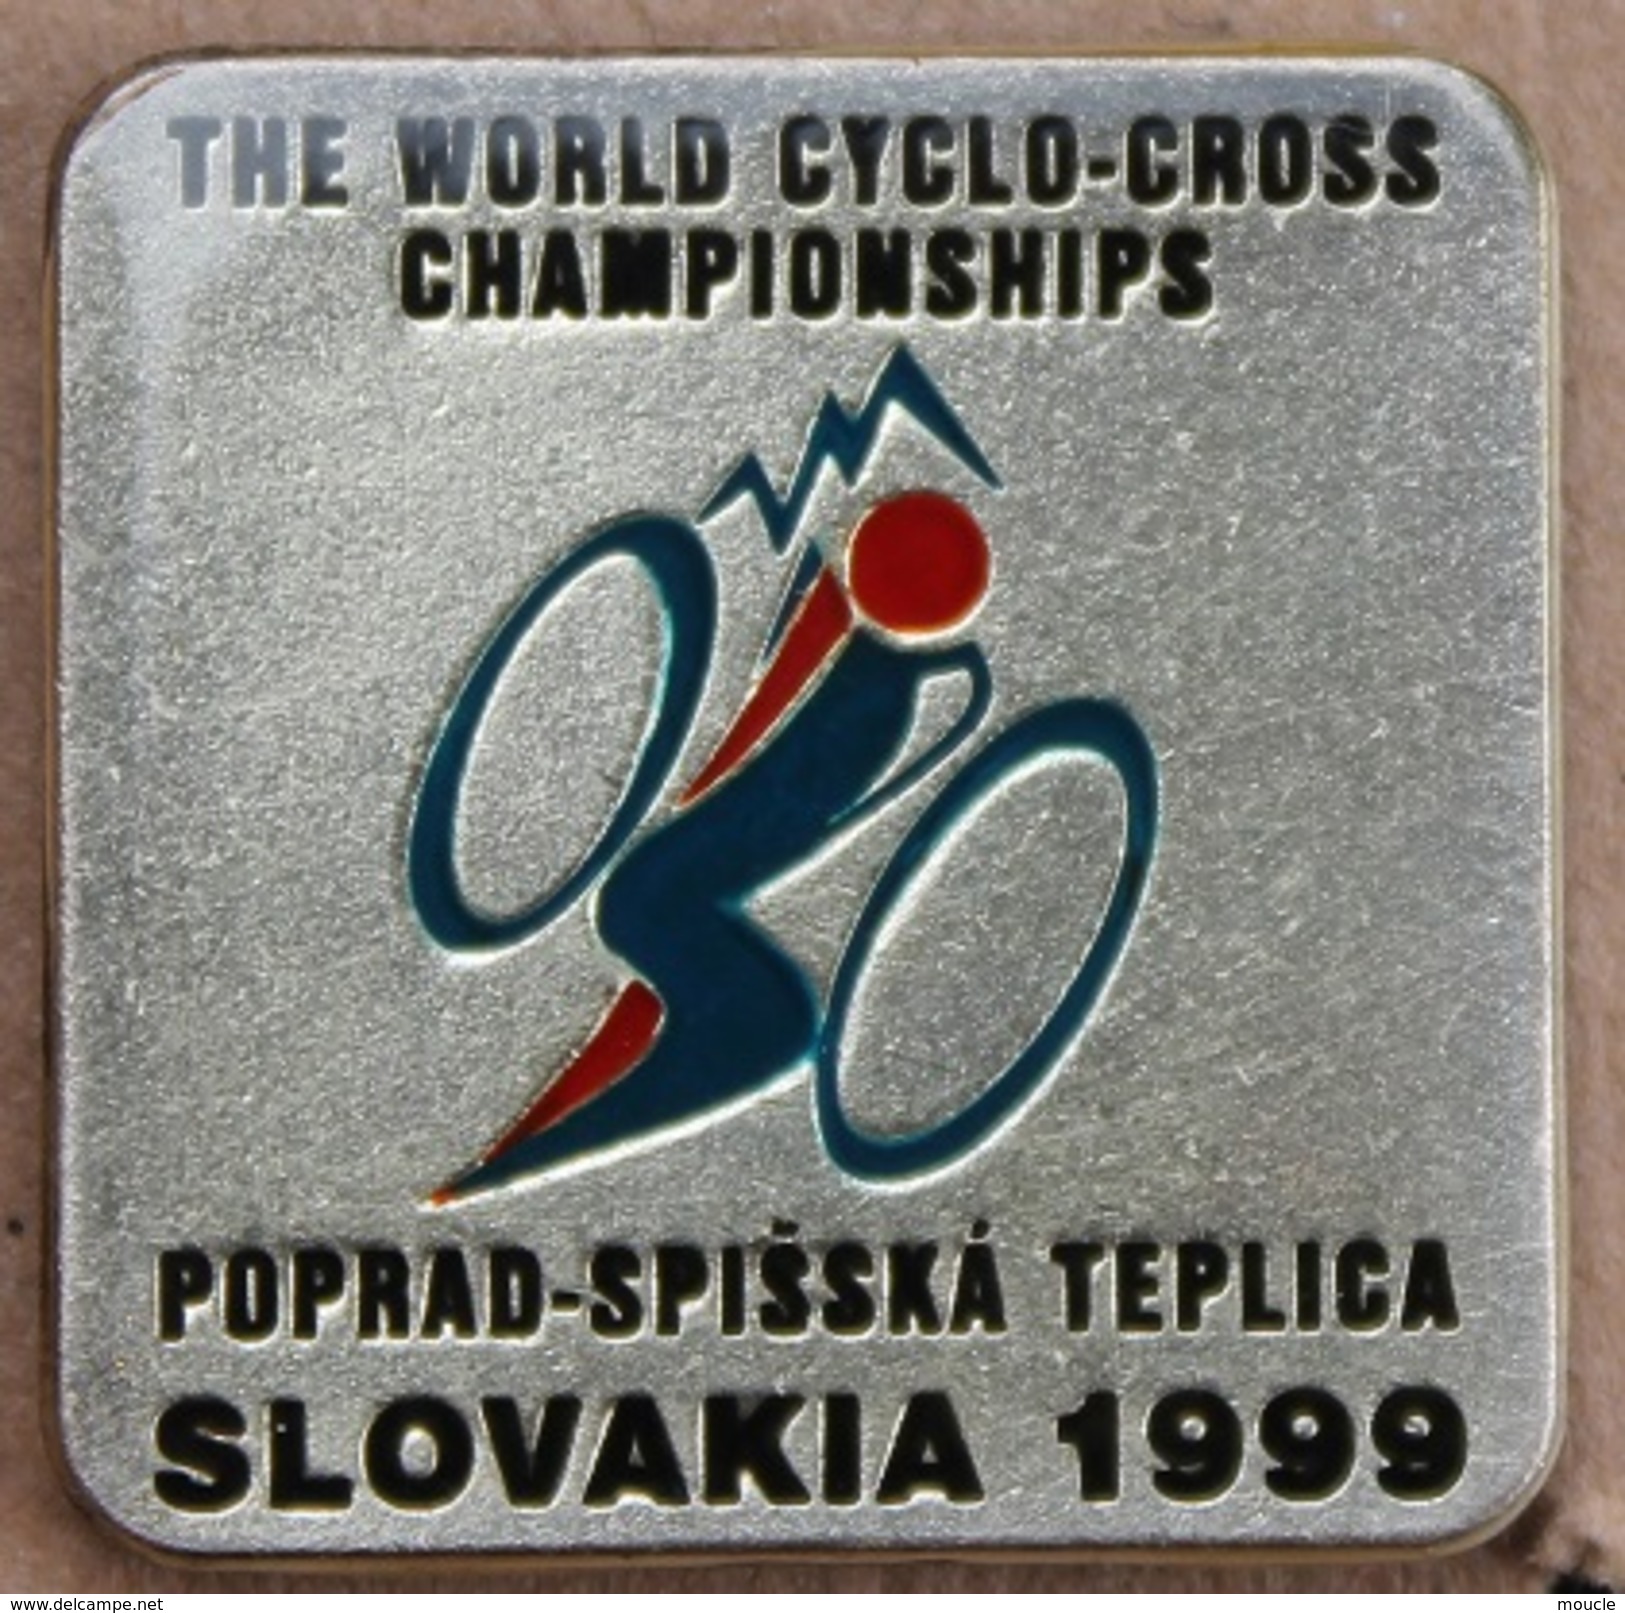 CYCLISME - VELO - CYCLISTE - THE WORLD CYCLO-CROSS CHAMPIONSHIPS POPRAD - SPISSKA TEPLICA SLOVAKIA 1999 -    (17) - Ciclismo